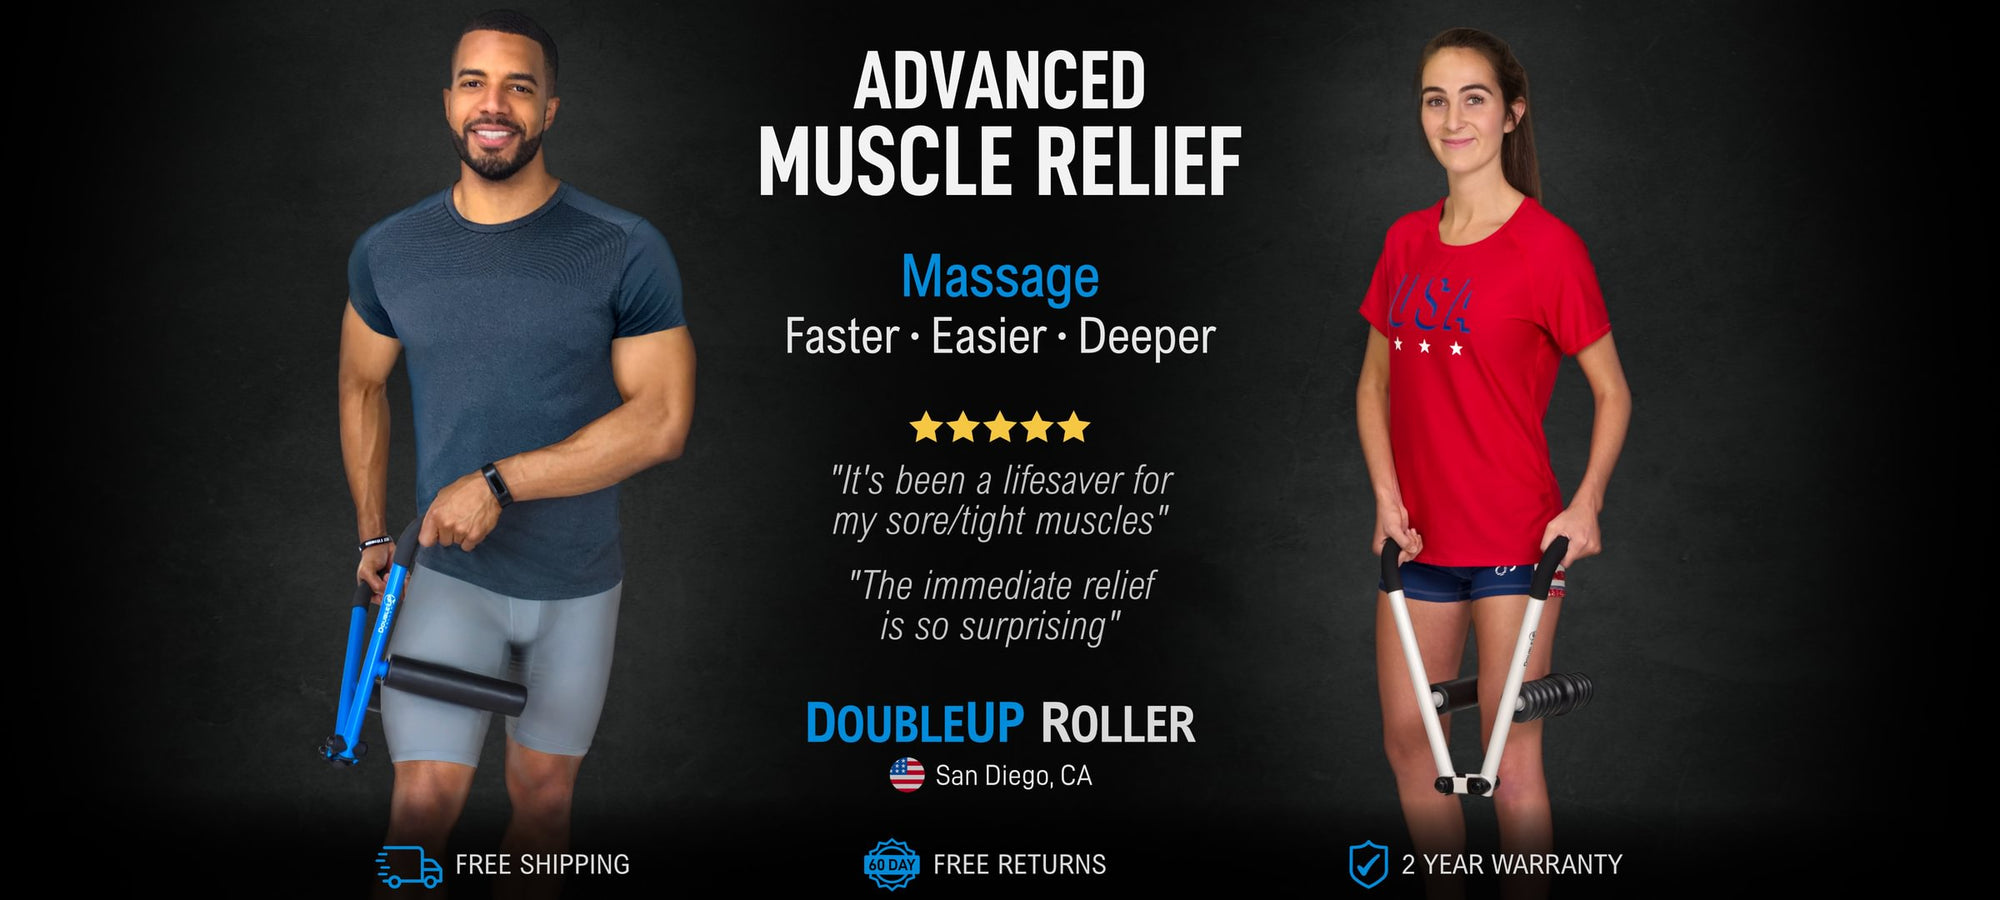 DoubleUP Roller Banner - Foam Rolling Reinvented - Faster Easier Deeper Muscle Relief